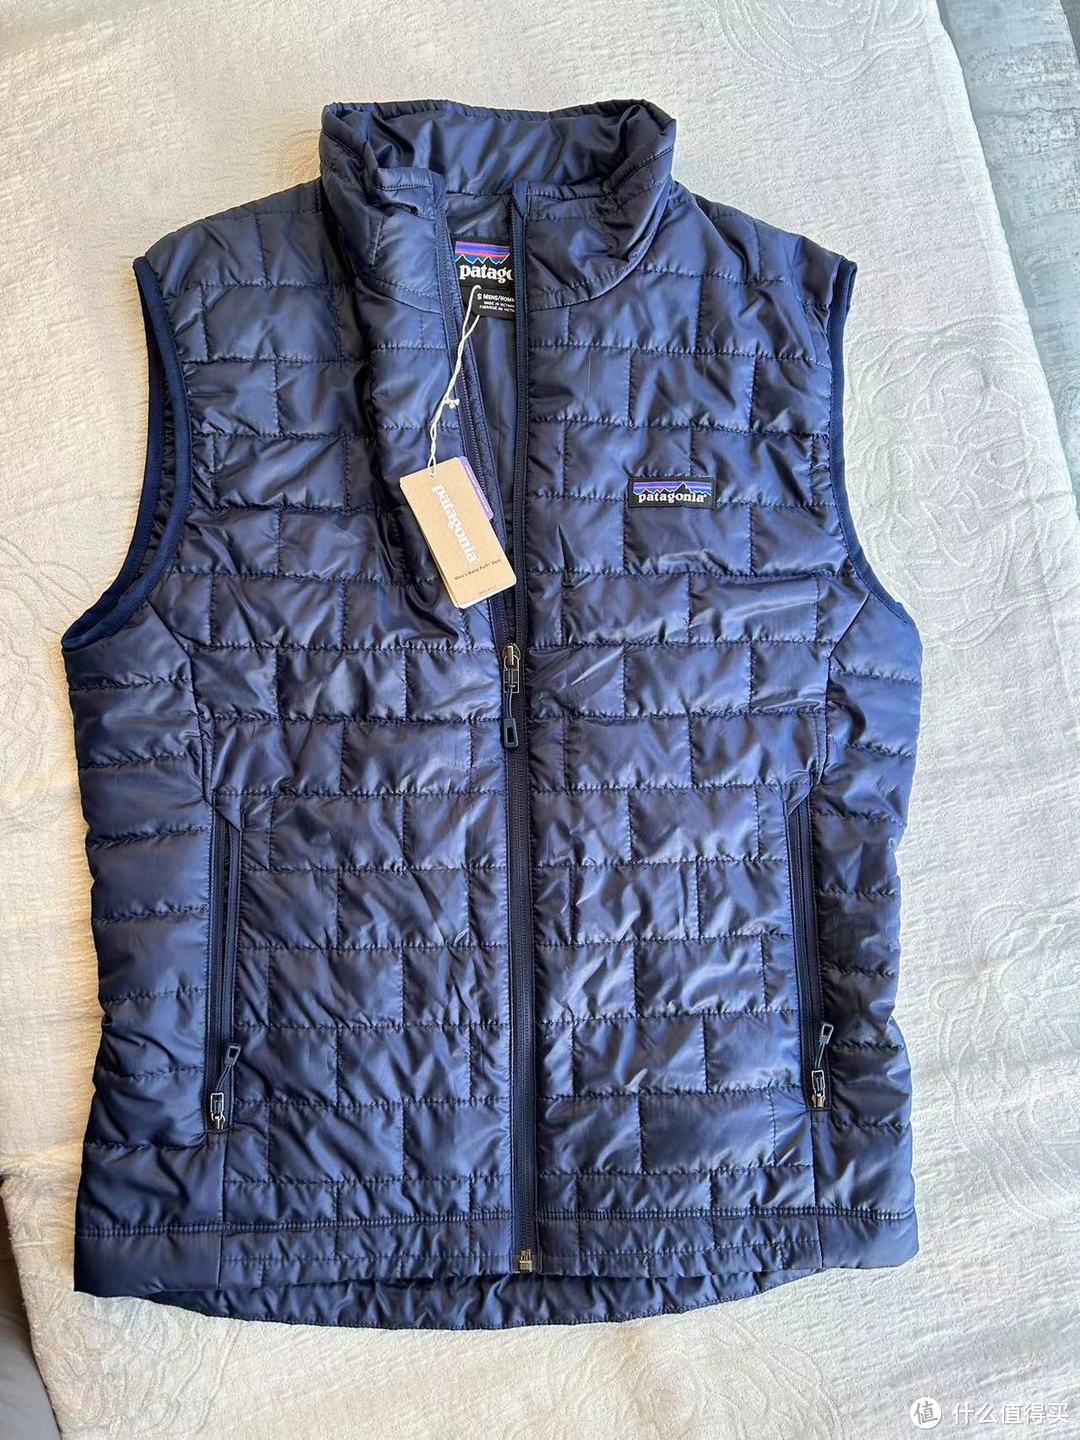 Patagonia nano puff vest, 84242,S, classic navy